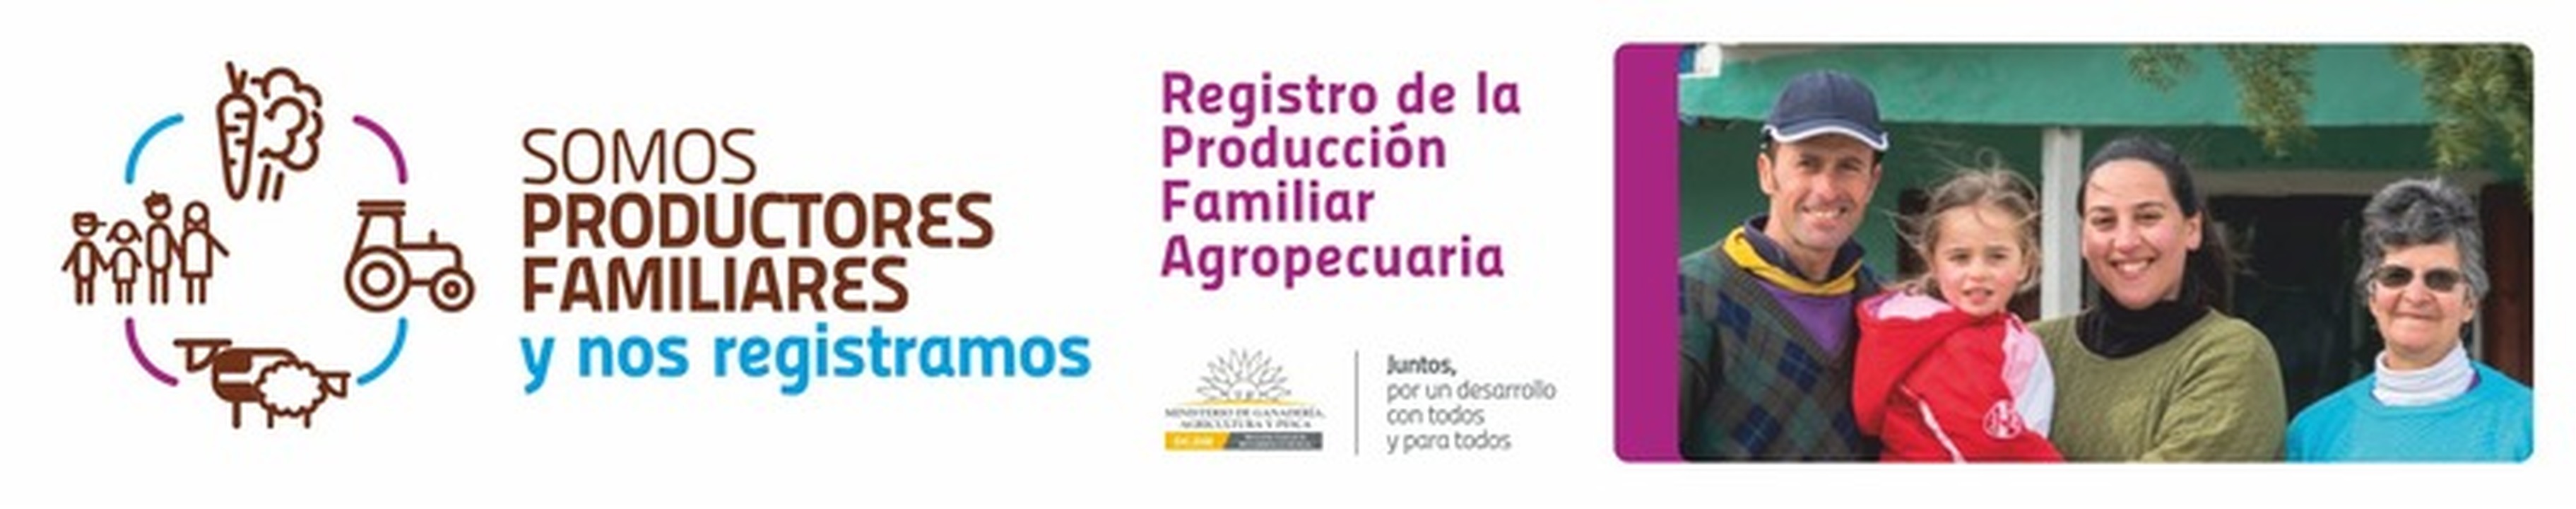 Registro de productores familiares agropecuarios